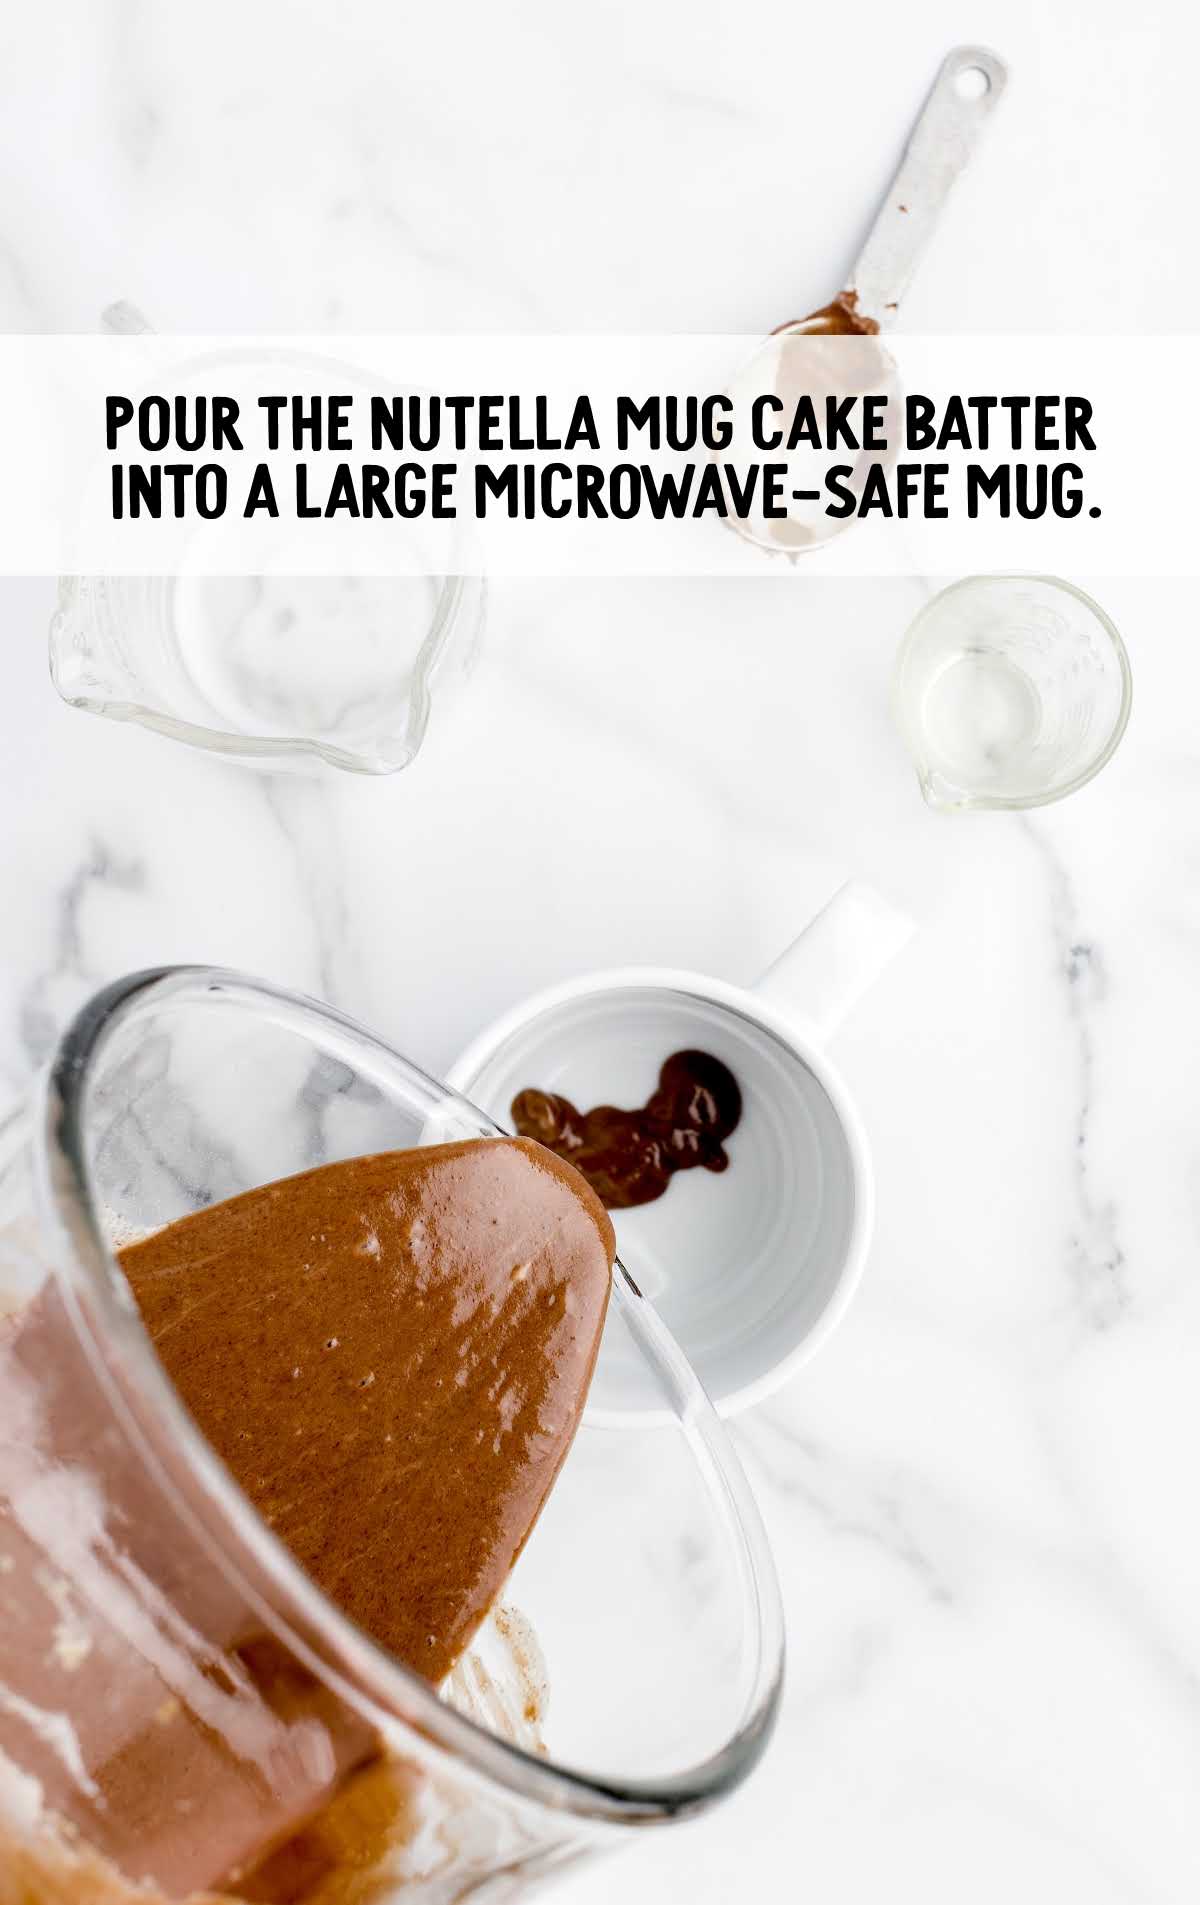 nutella mug cake batter poured into a microwave safe mug